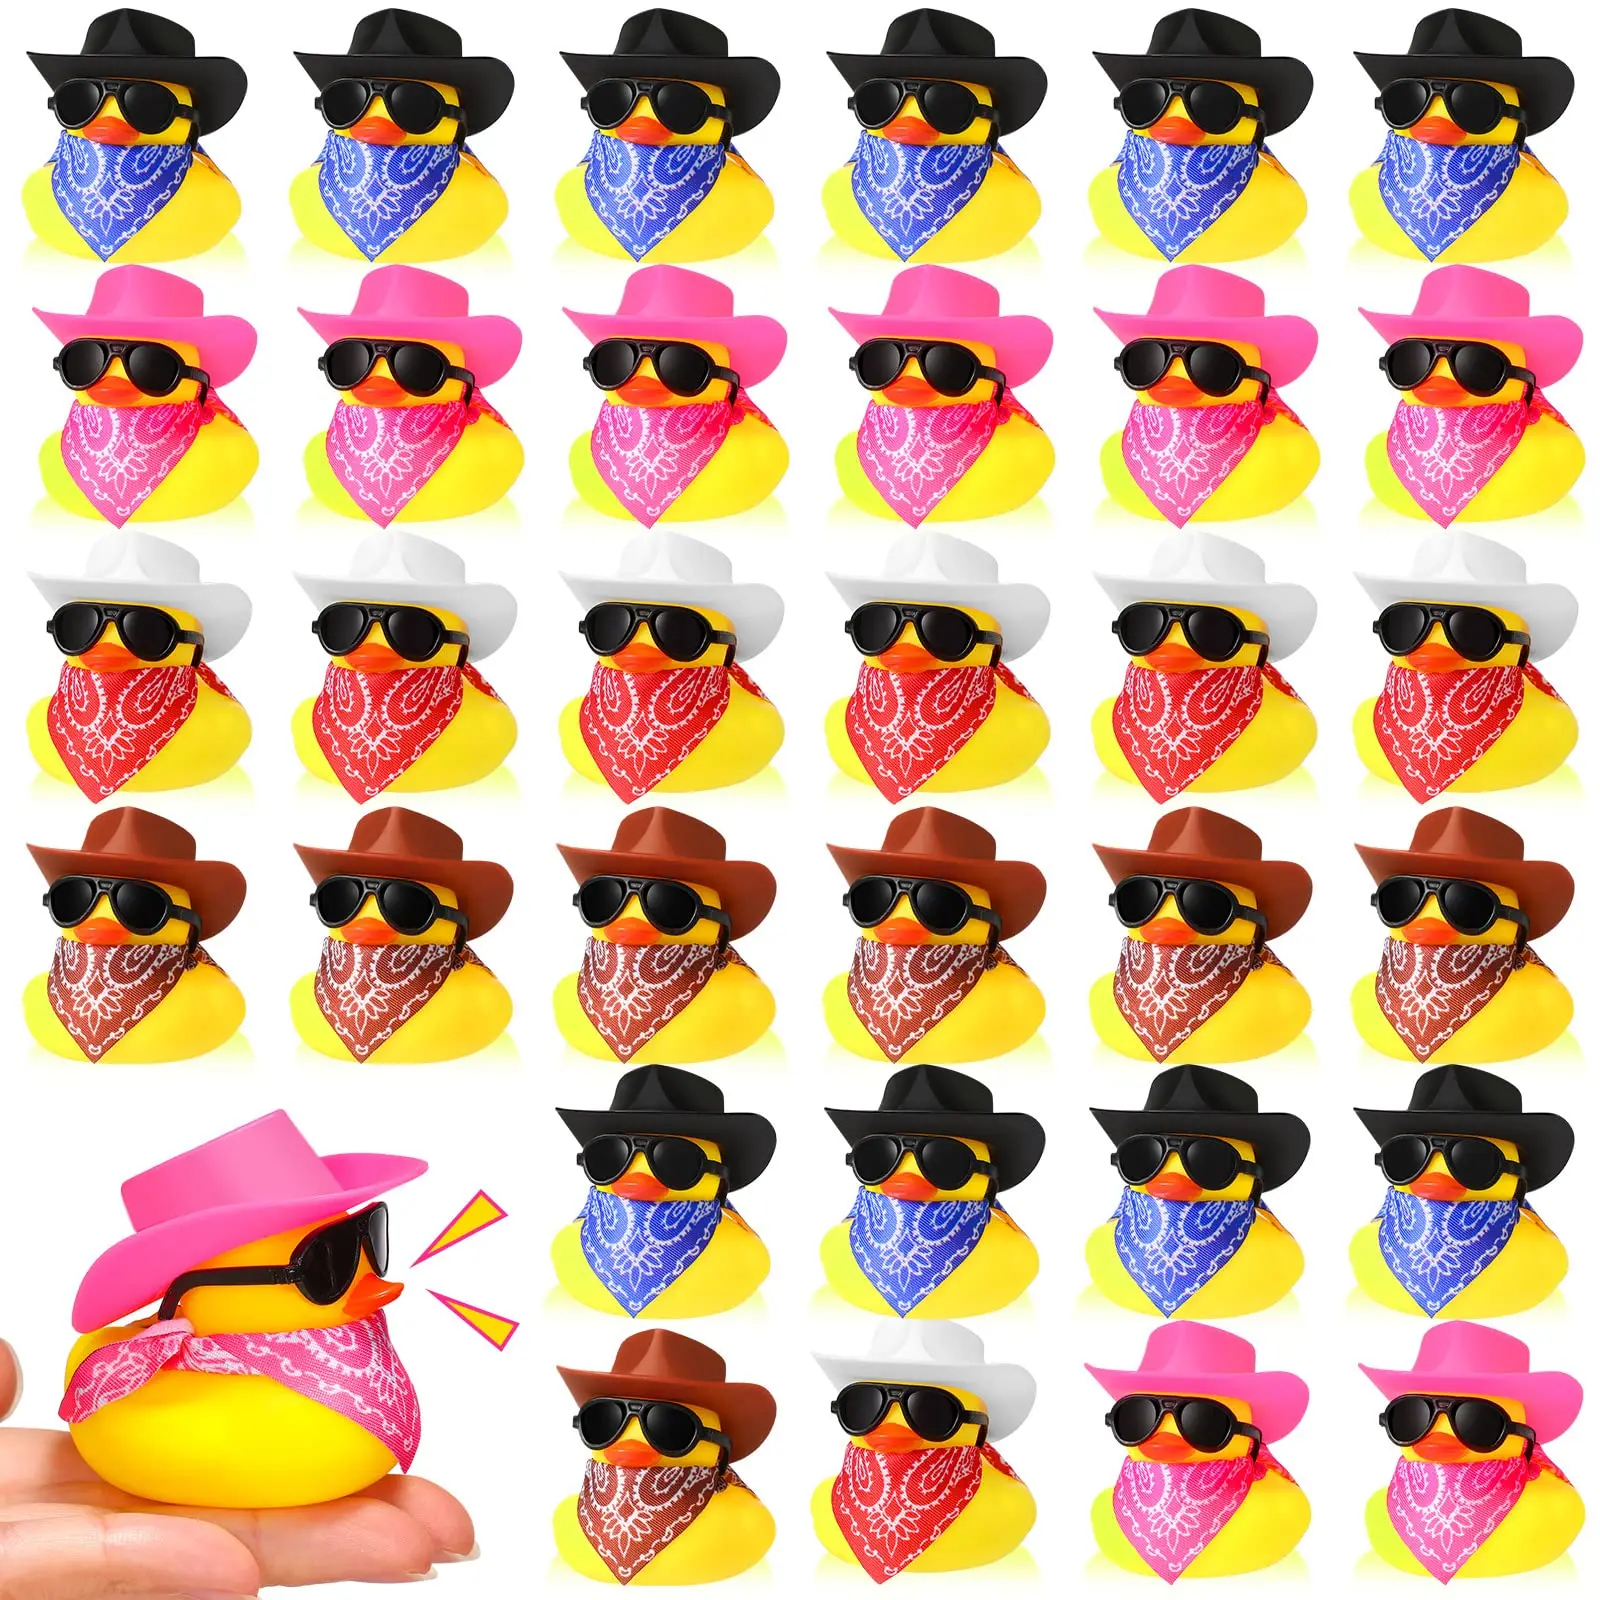 

36 Set Cowboy Rubber Duck Mini Yellow Duckies Bath Party Toy Tiny Ducks Bathtub Toy with Cowboy Hat Paisley Bandanas Sunglasses